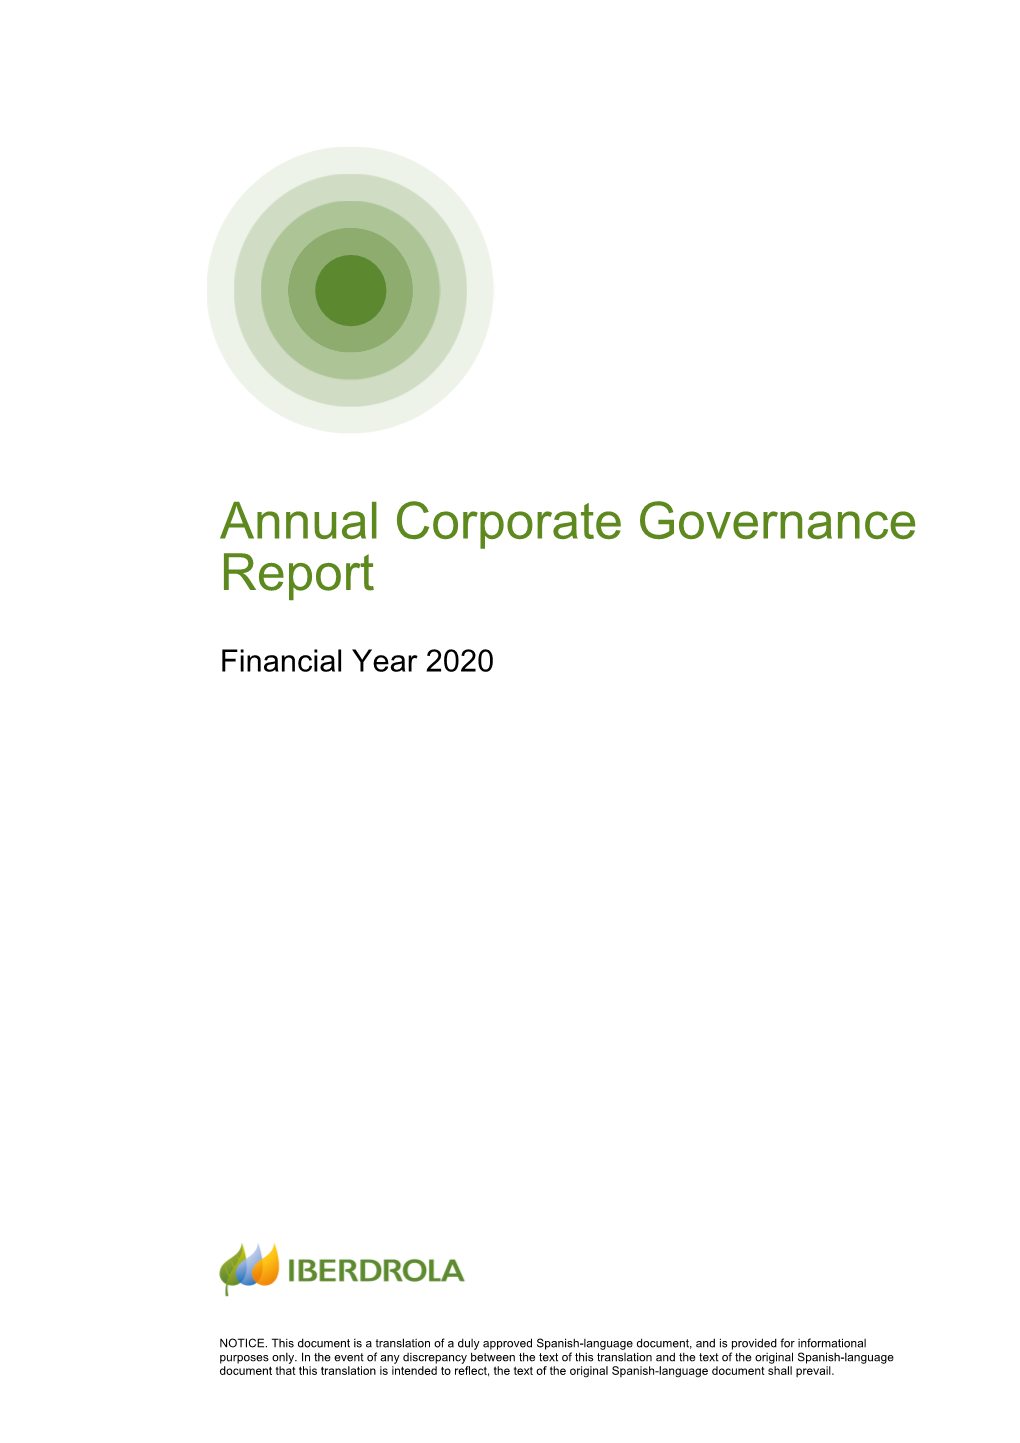 Annual Corporate Governance Report